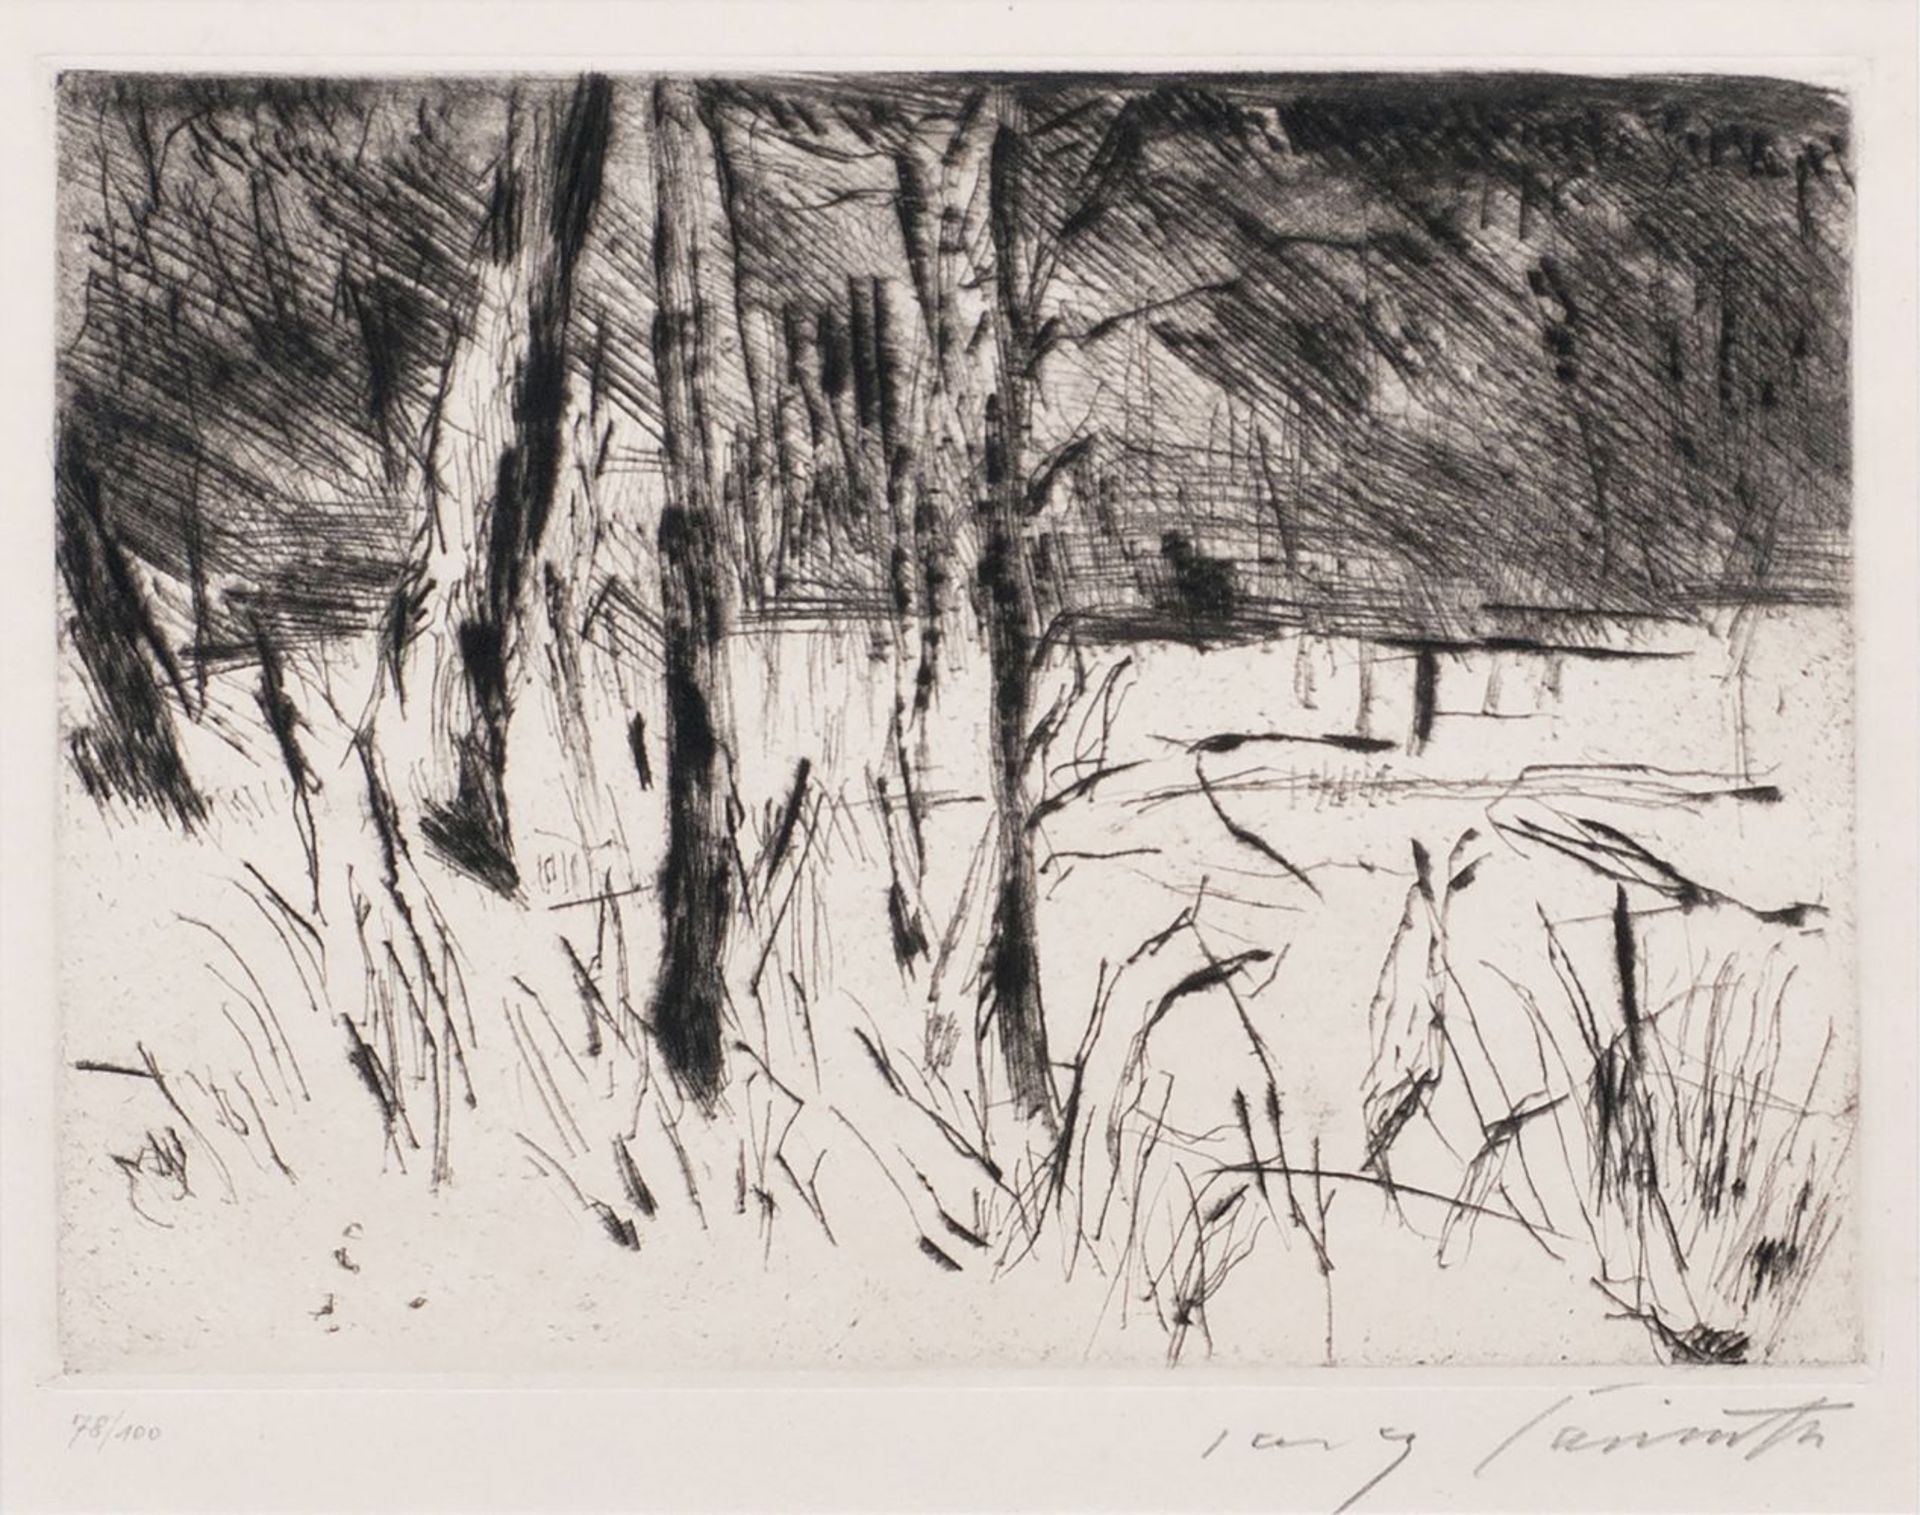 Lovis Corinth (Tapiau 1858 - Zandvoort 1925). Tiergarten im Januar.